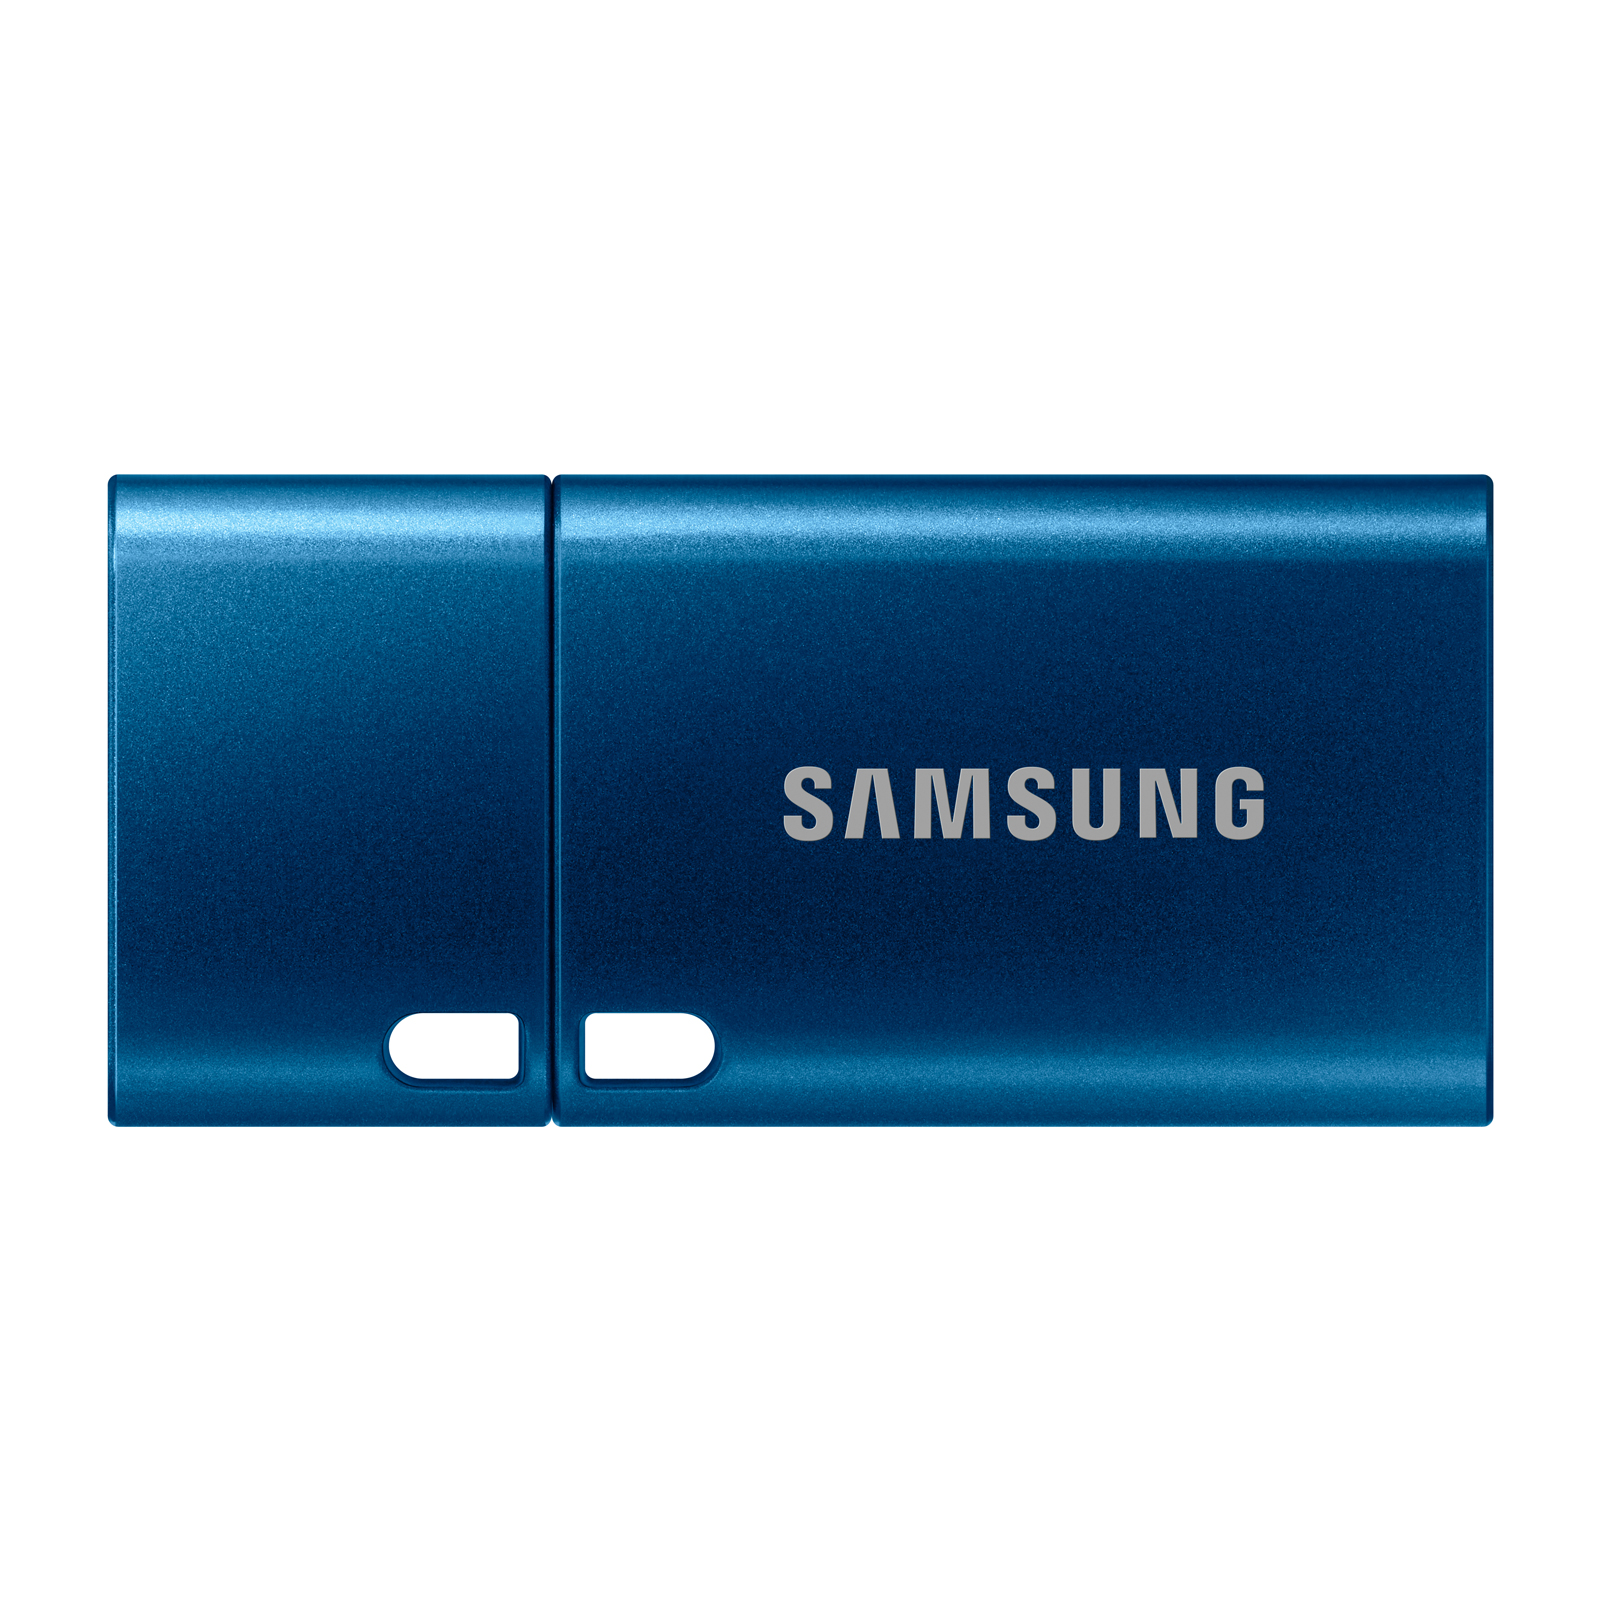 Samsung USBメモリ Type-C MUF-256DA-IT [USBメモリ]